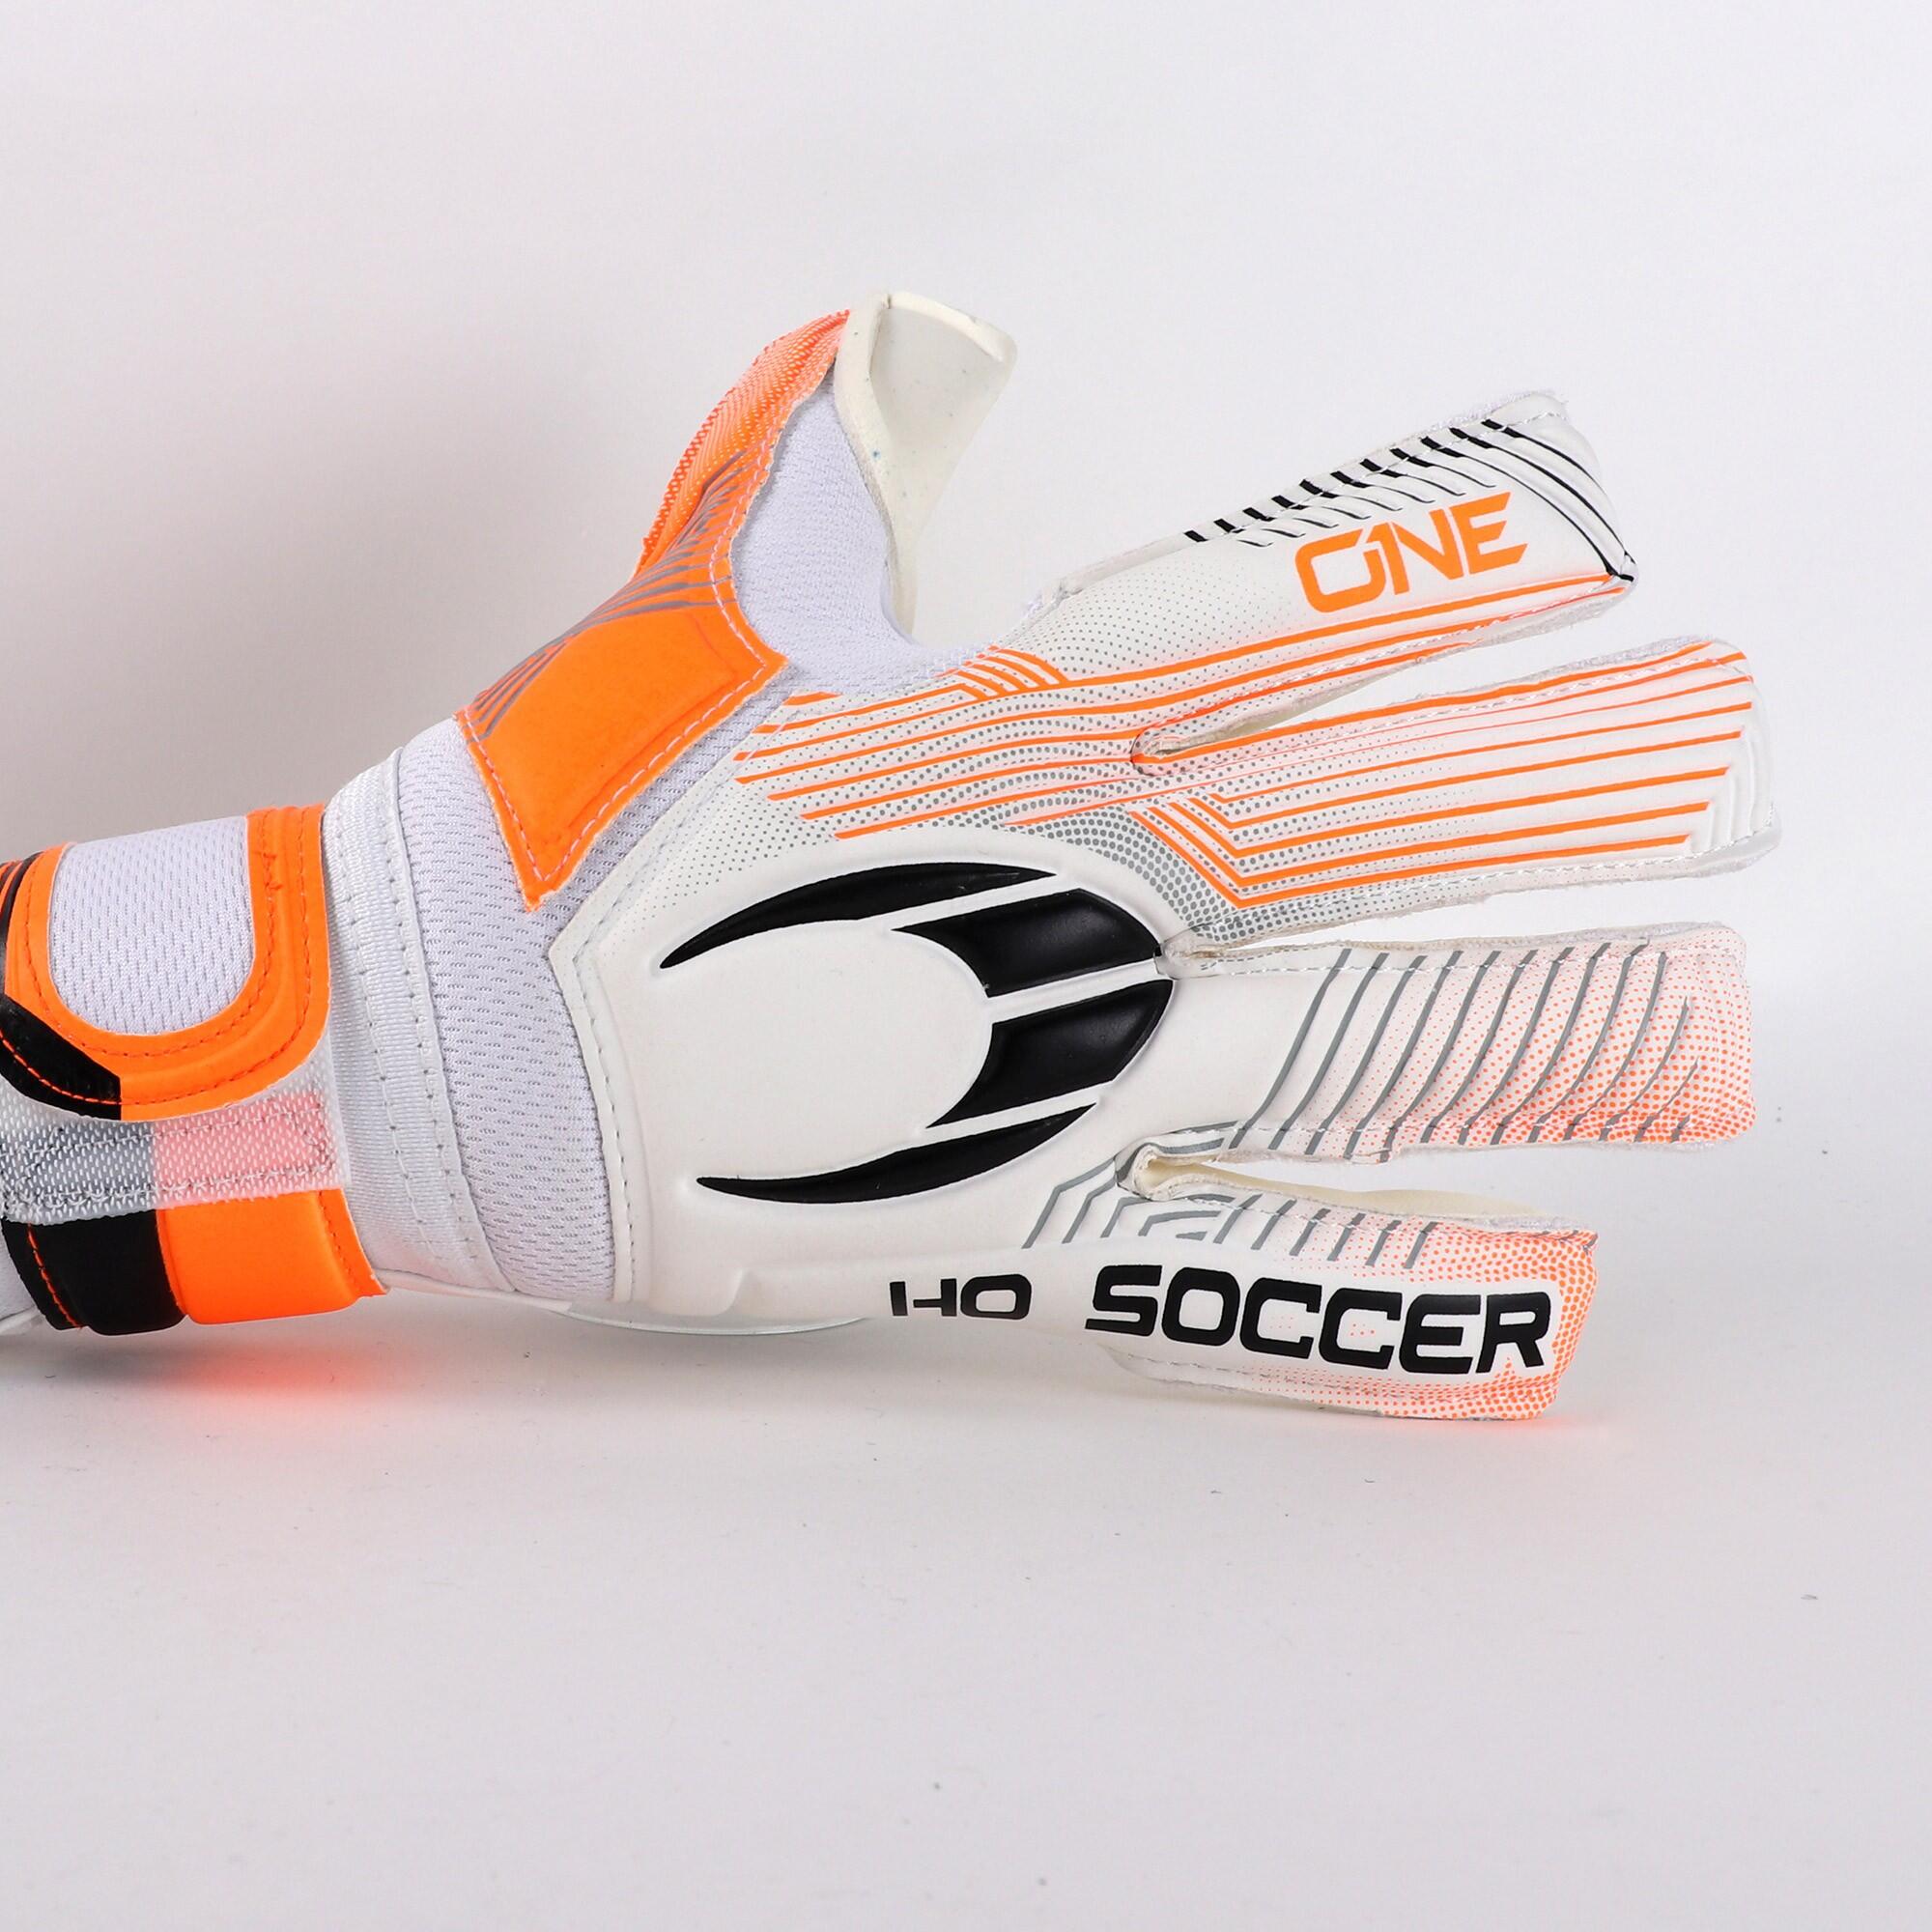 HO Soccer One Negative Junior (5mm all surface)   Goalkeeper Gloves 5/5